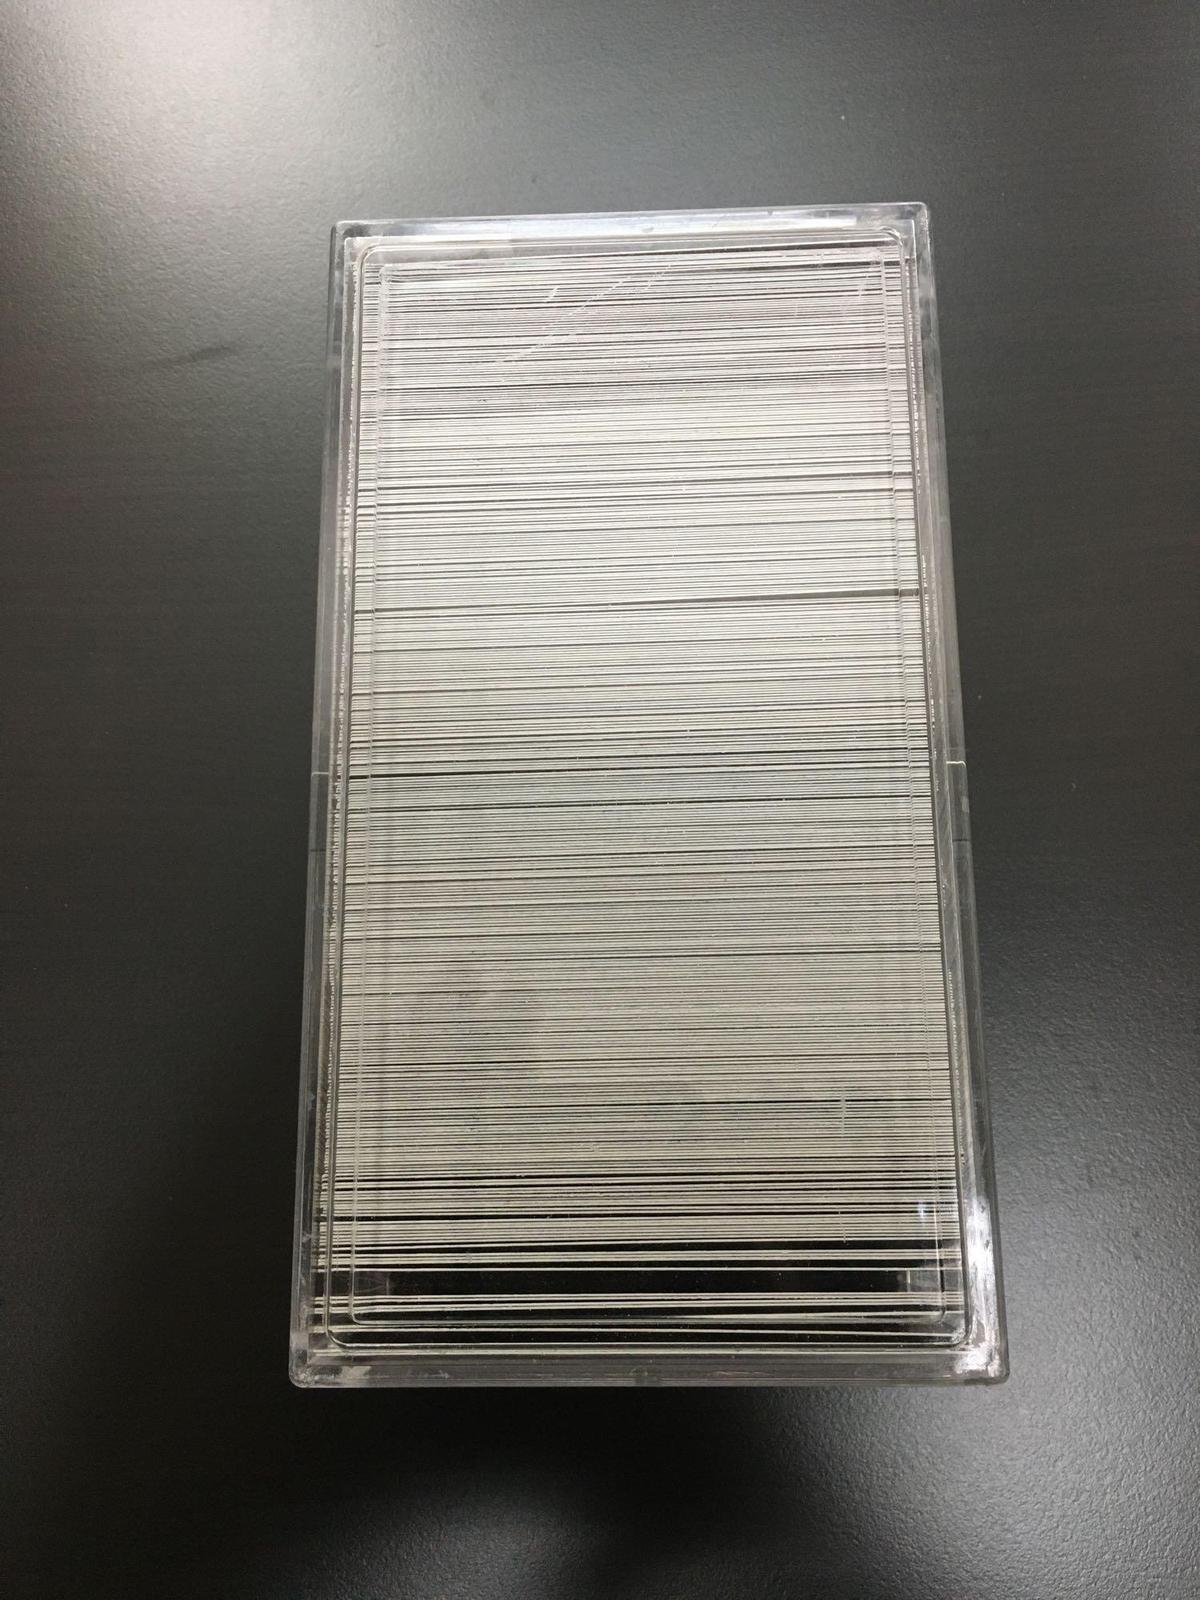 2017 Topps Series 1 Baseball 350 Card Complete Set